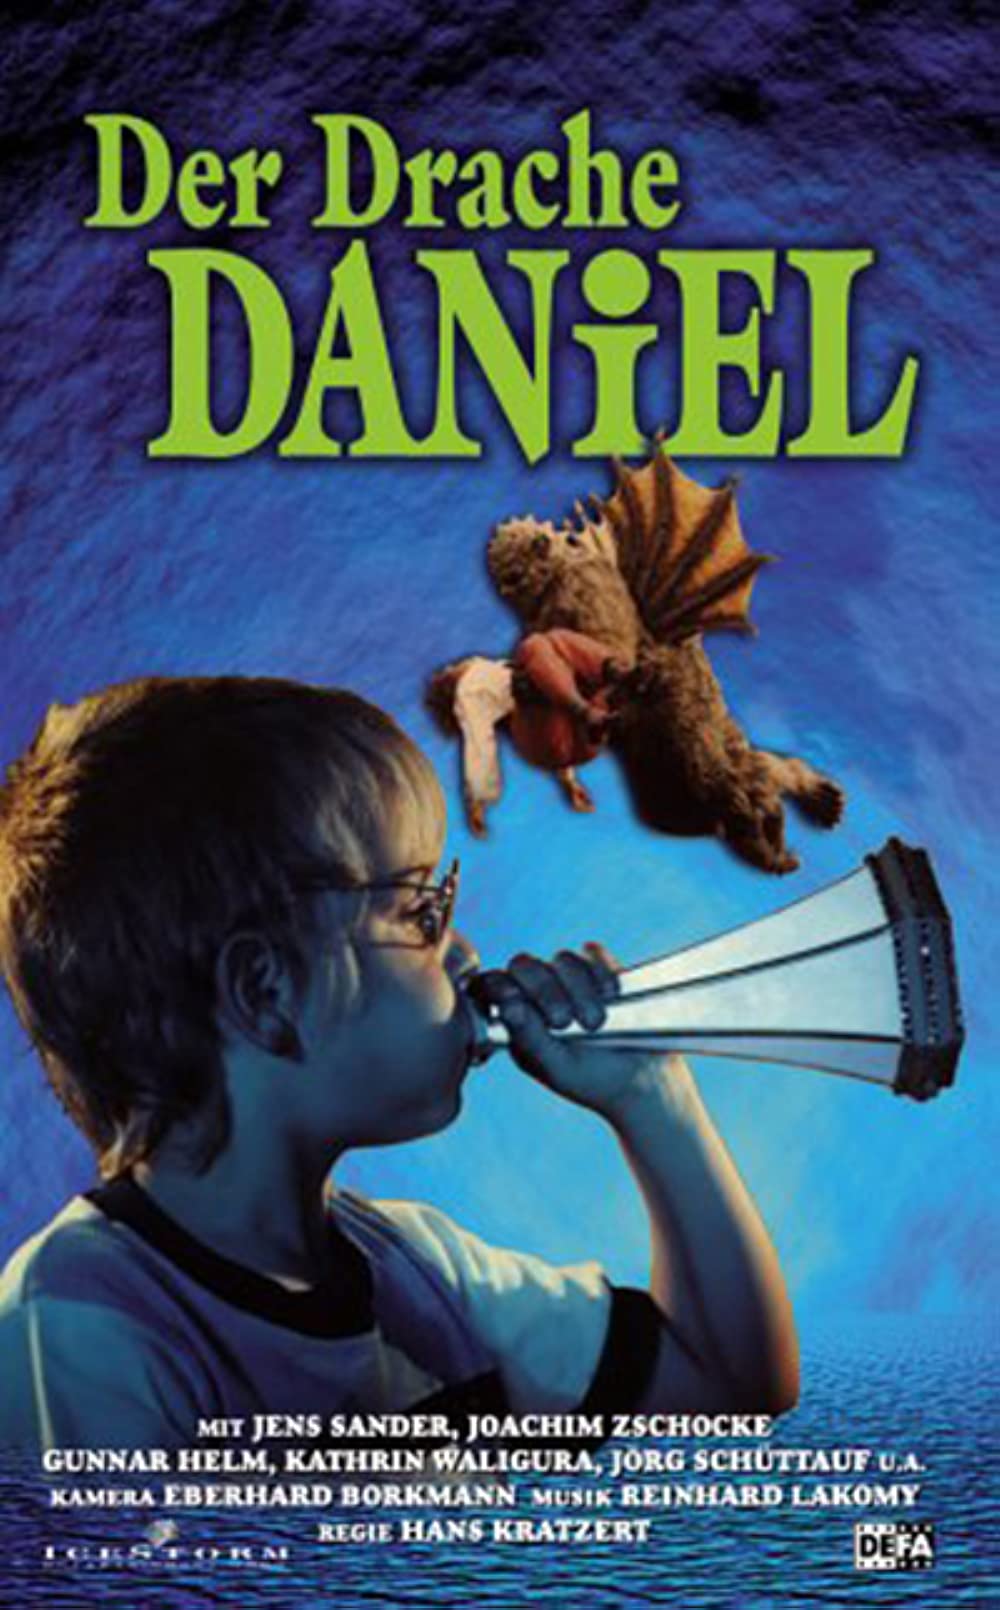 Filmbeschreibung zu Der Drache Daniel